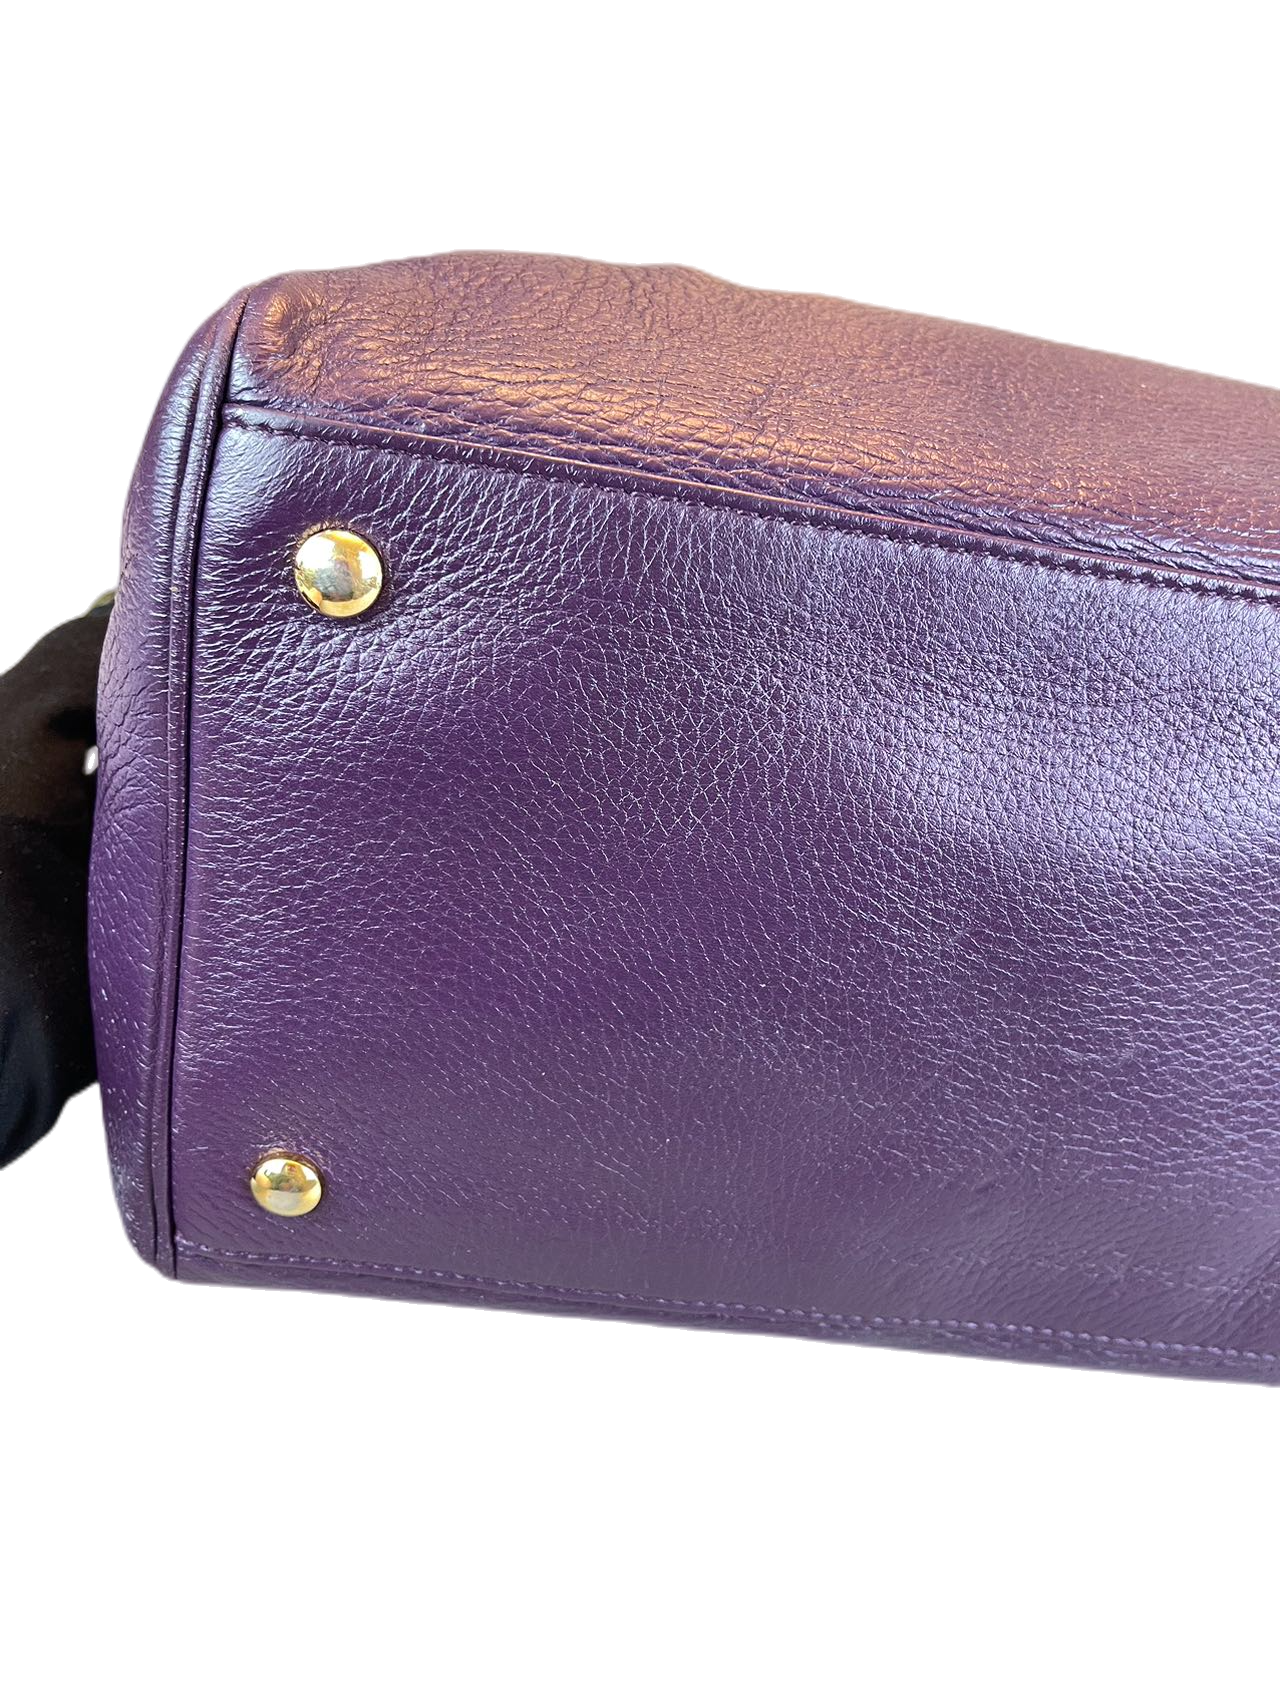 Versace Purple Leather Boston Bag Satchel Handbag